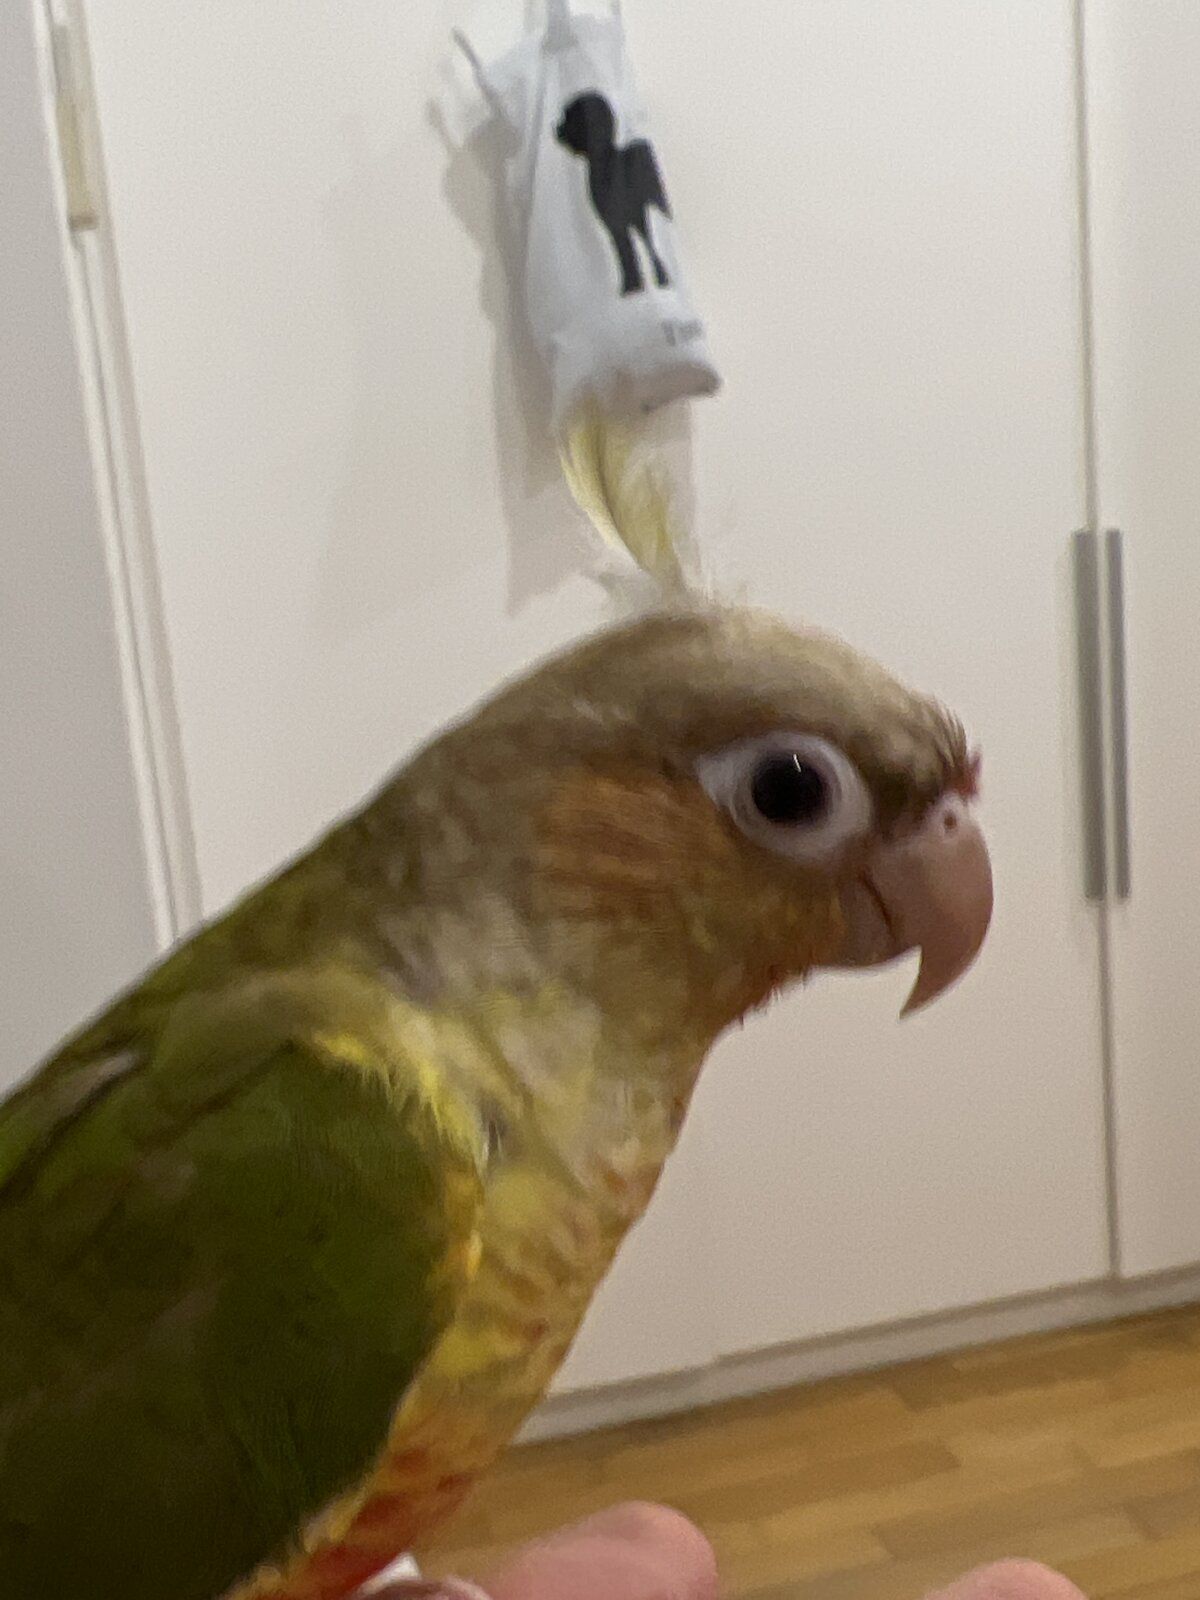 Makeshift cockatoo